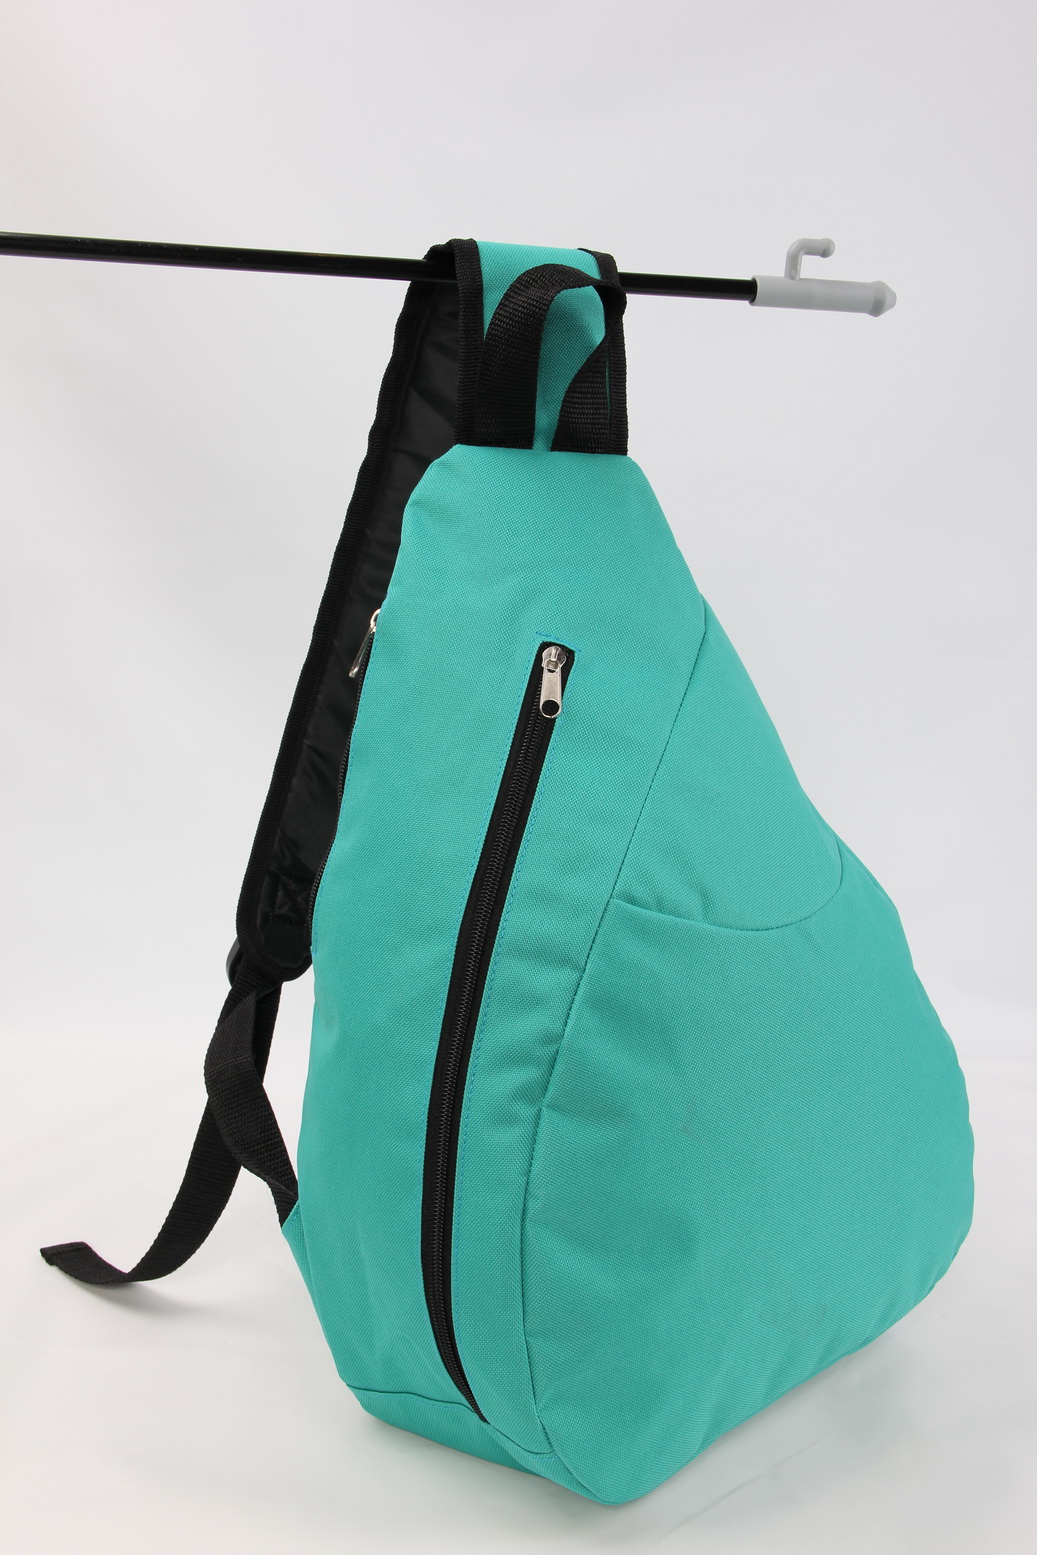 Wholesale Promotion Sling Backpack Bag,One Shoulder Backpack Bag- HAB13567 from china suppliers